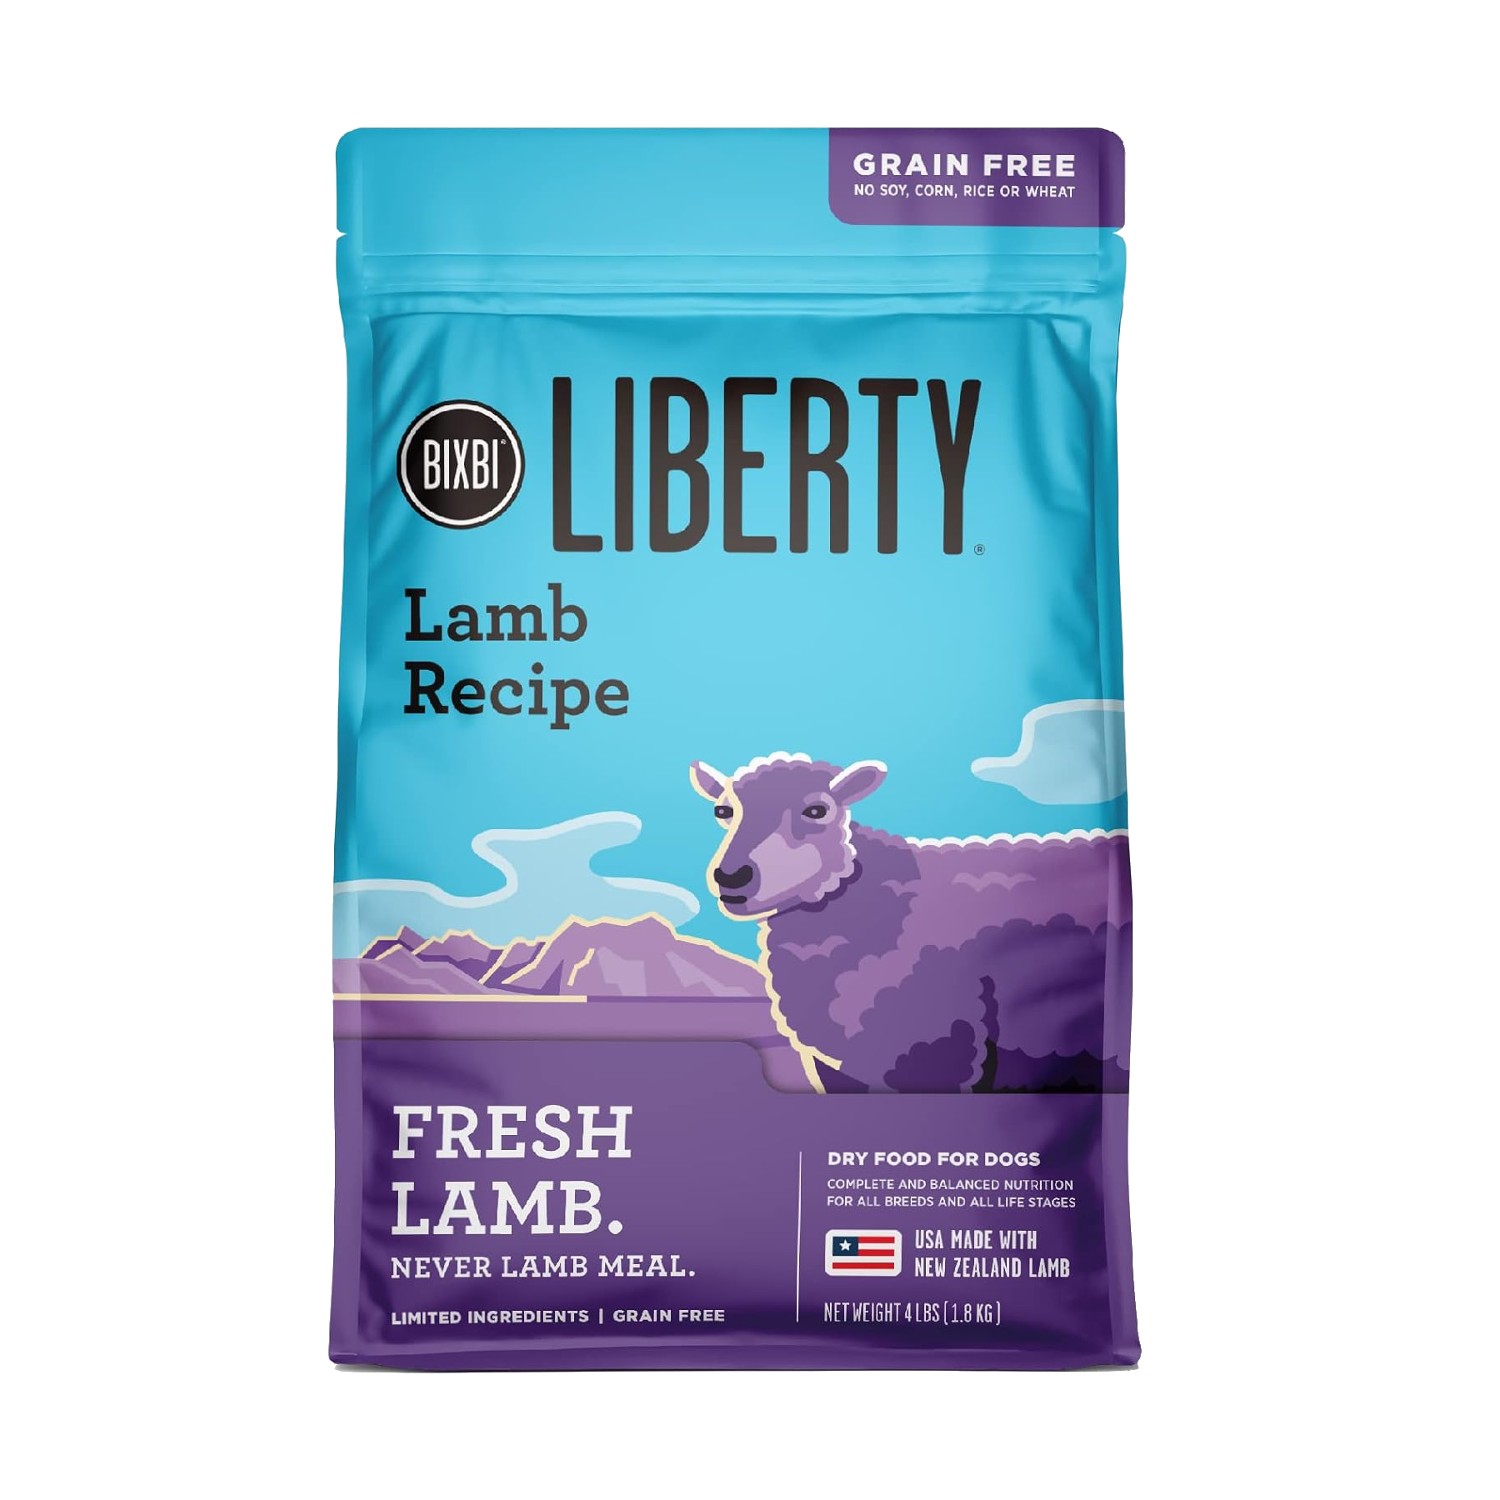 BIXBI Liberty Grain Free Dry Dog Food – Lamb Recipe